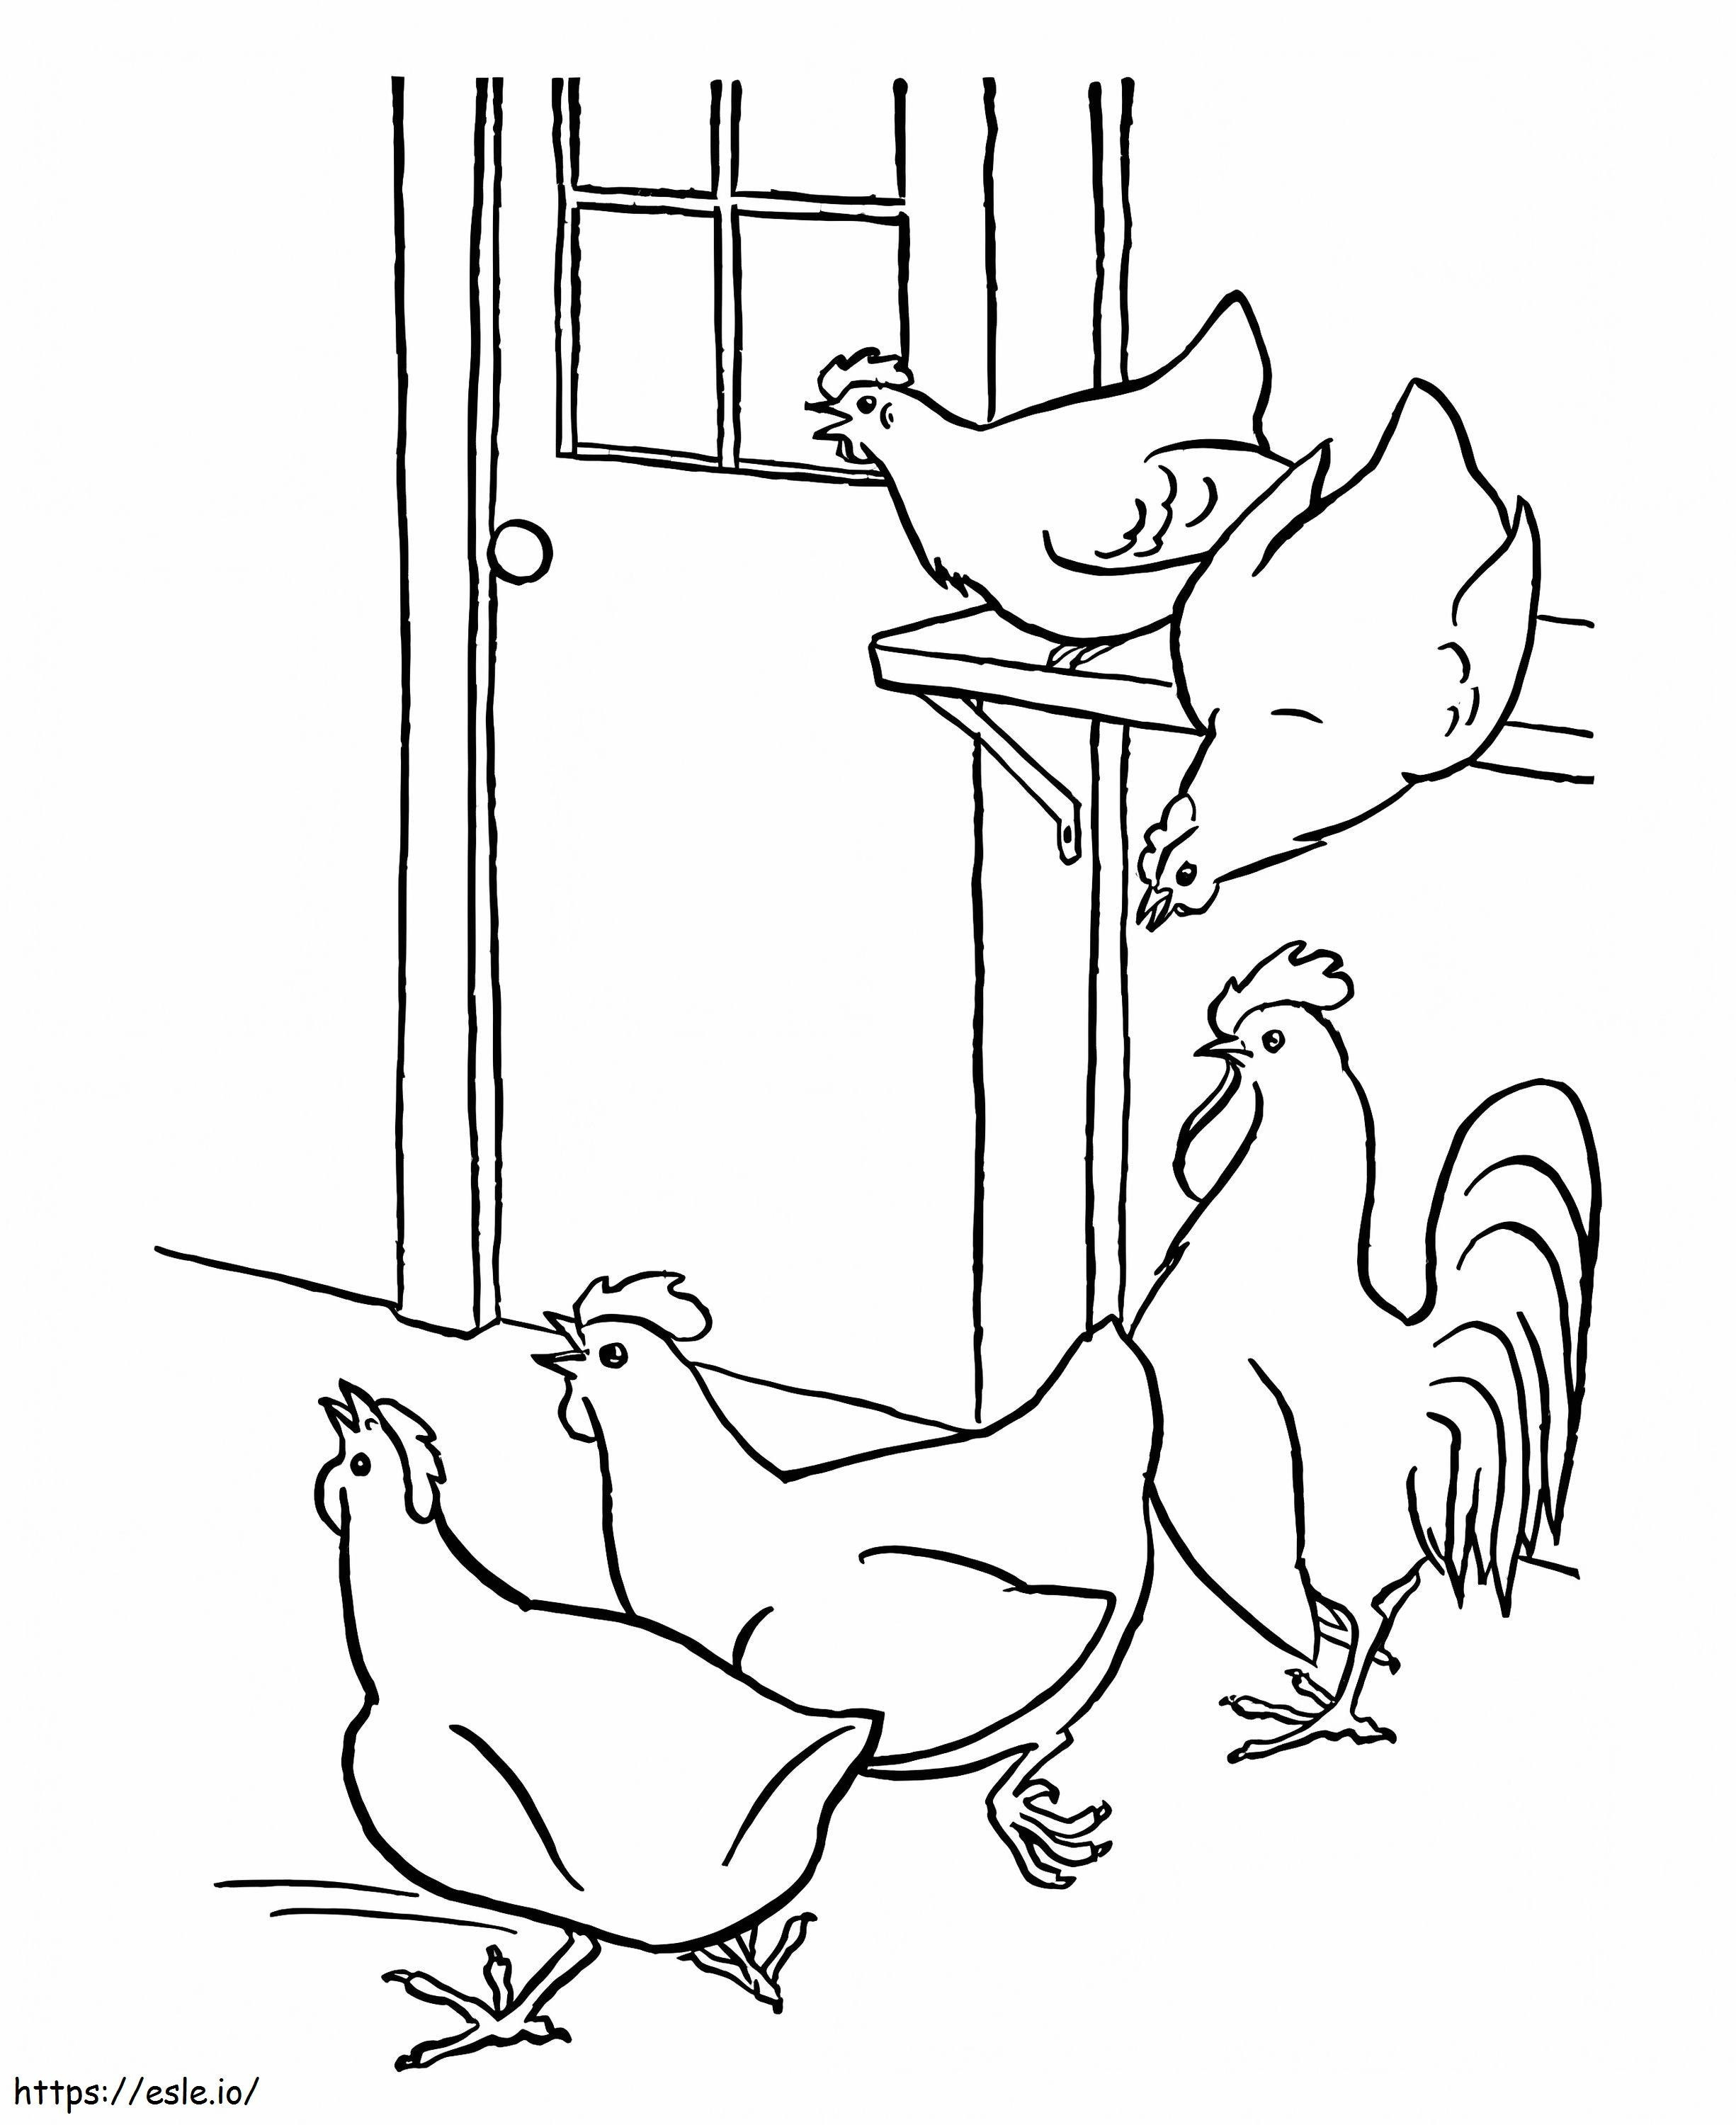 Hühner ausmalbilder